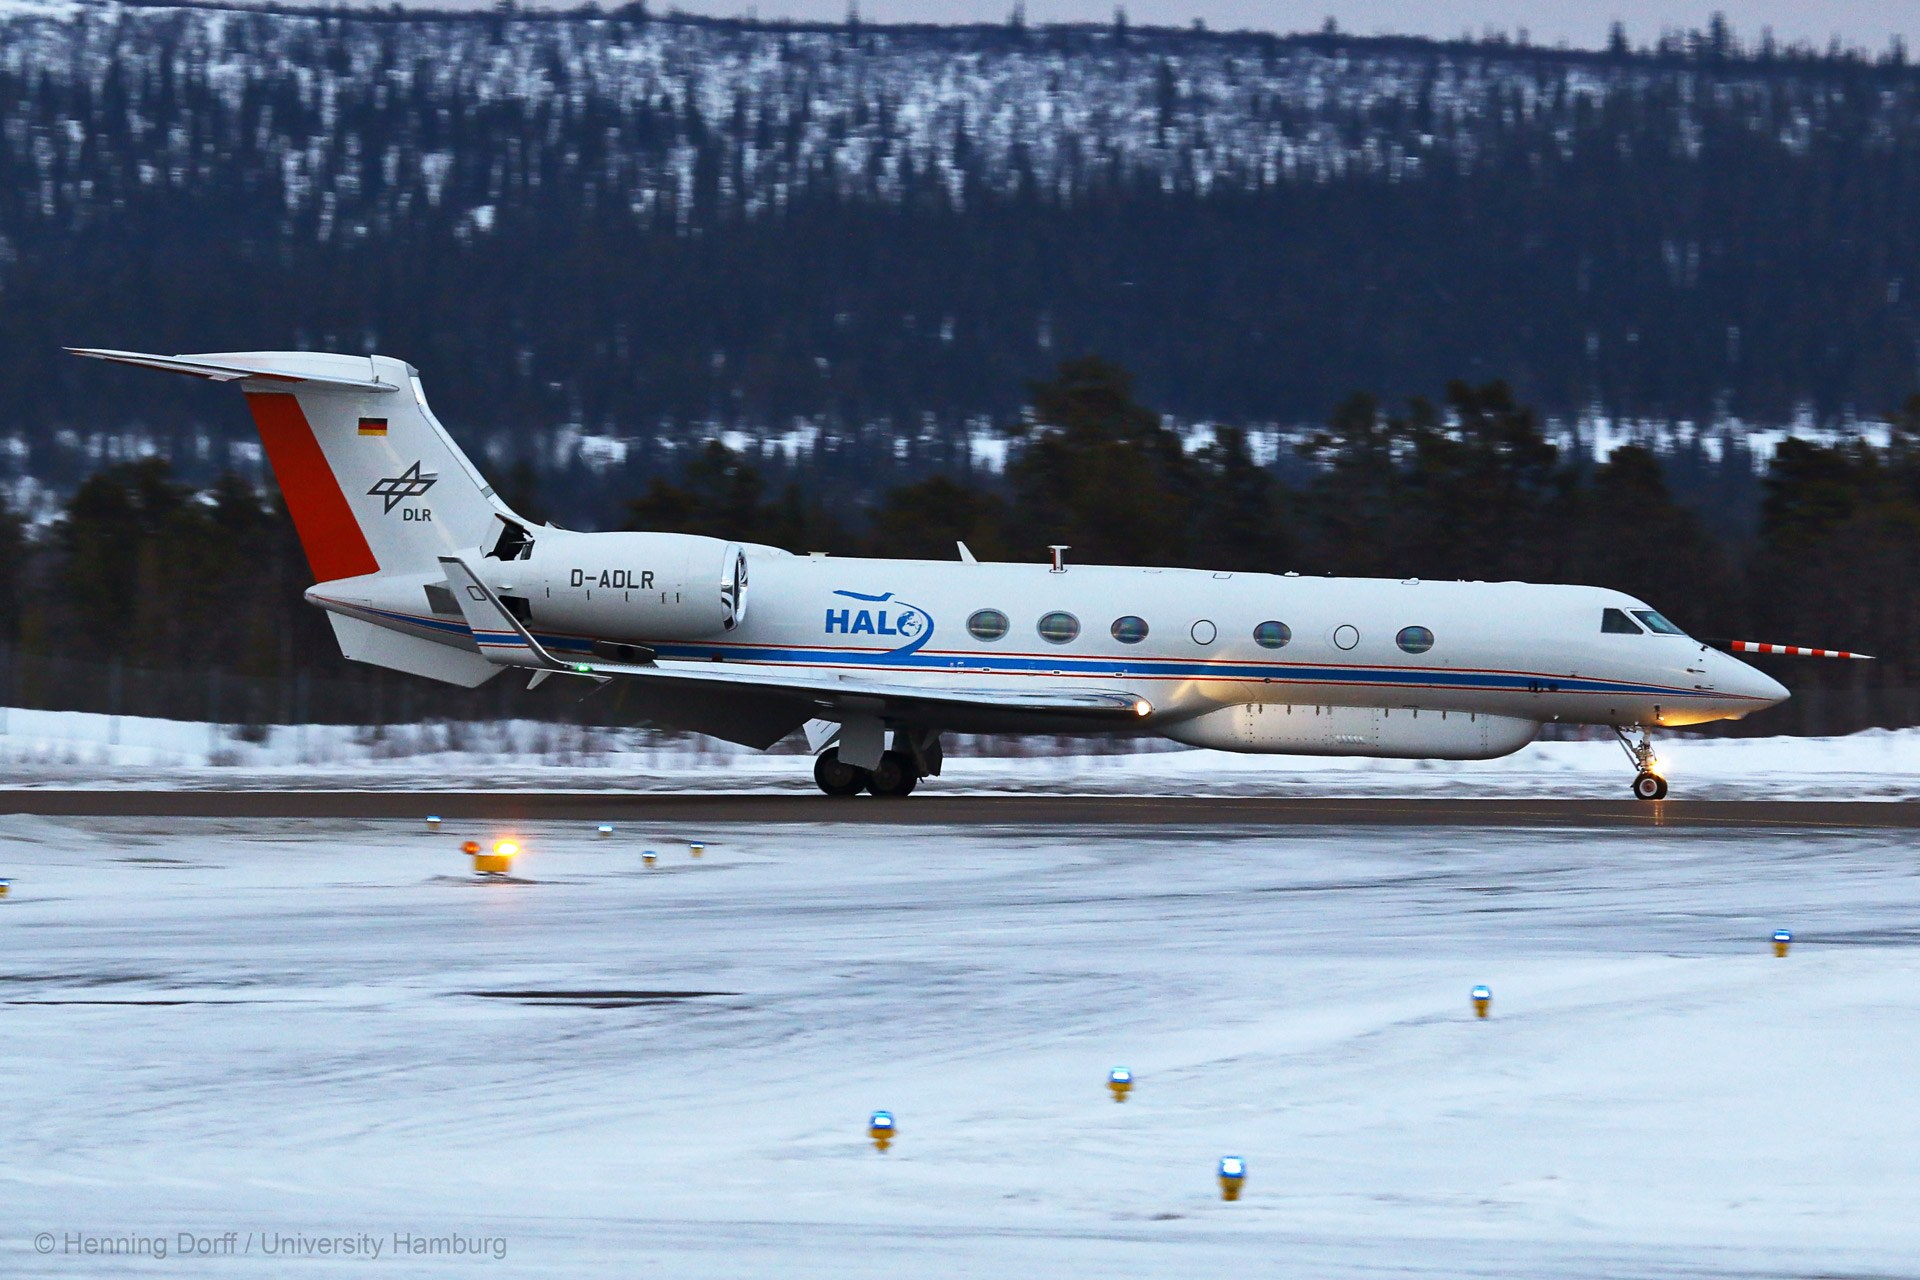 HALO after landing in Kiruna, Sweden